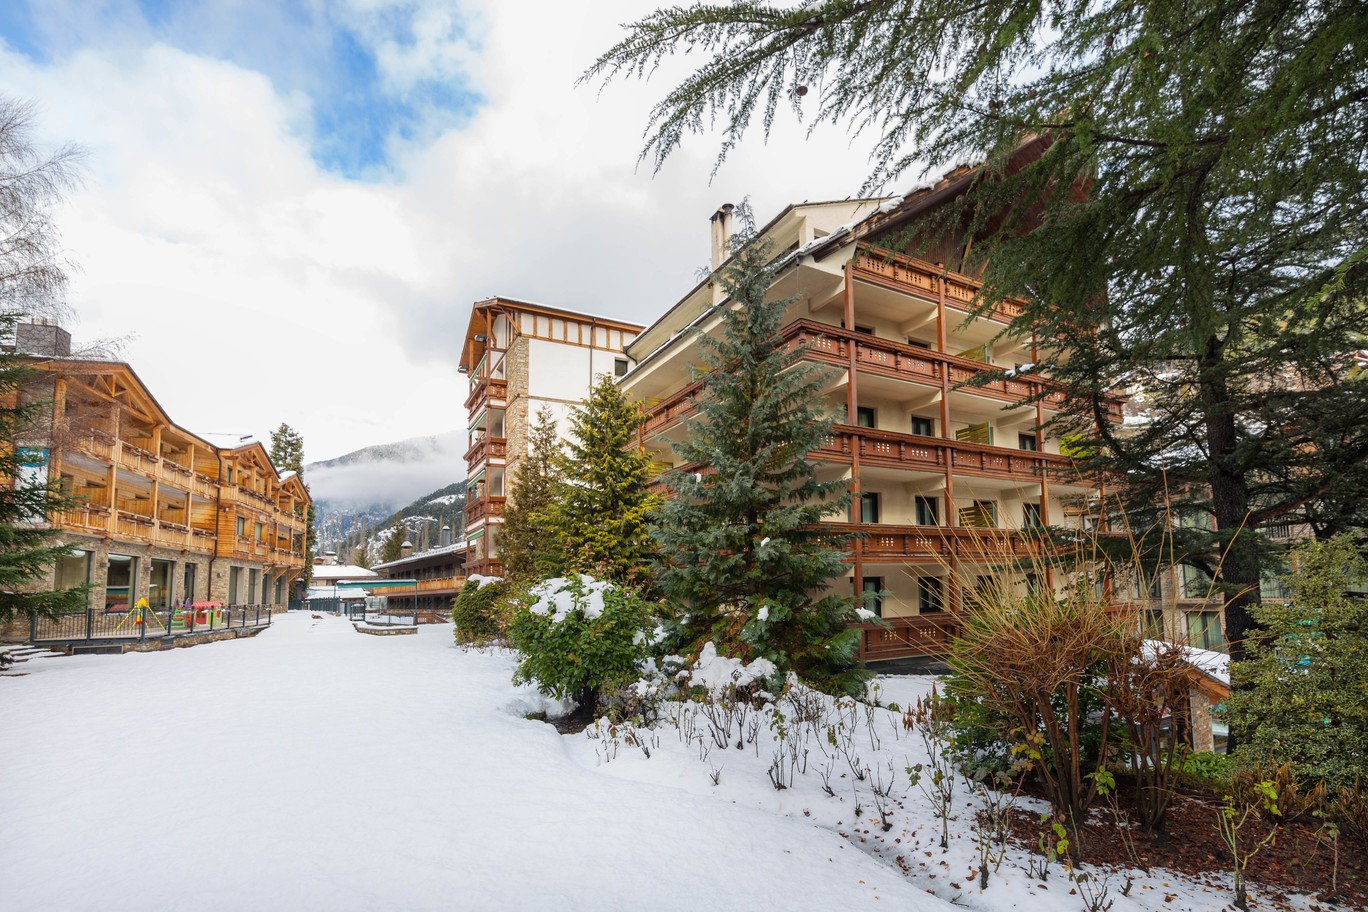 Enjoy the snow of Andorra